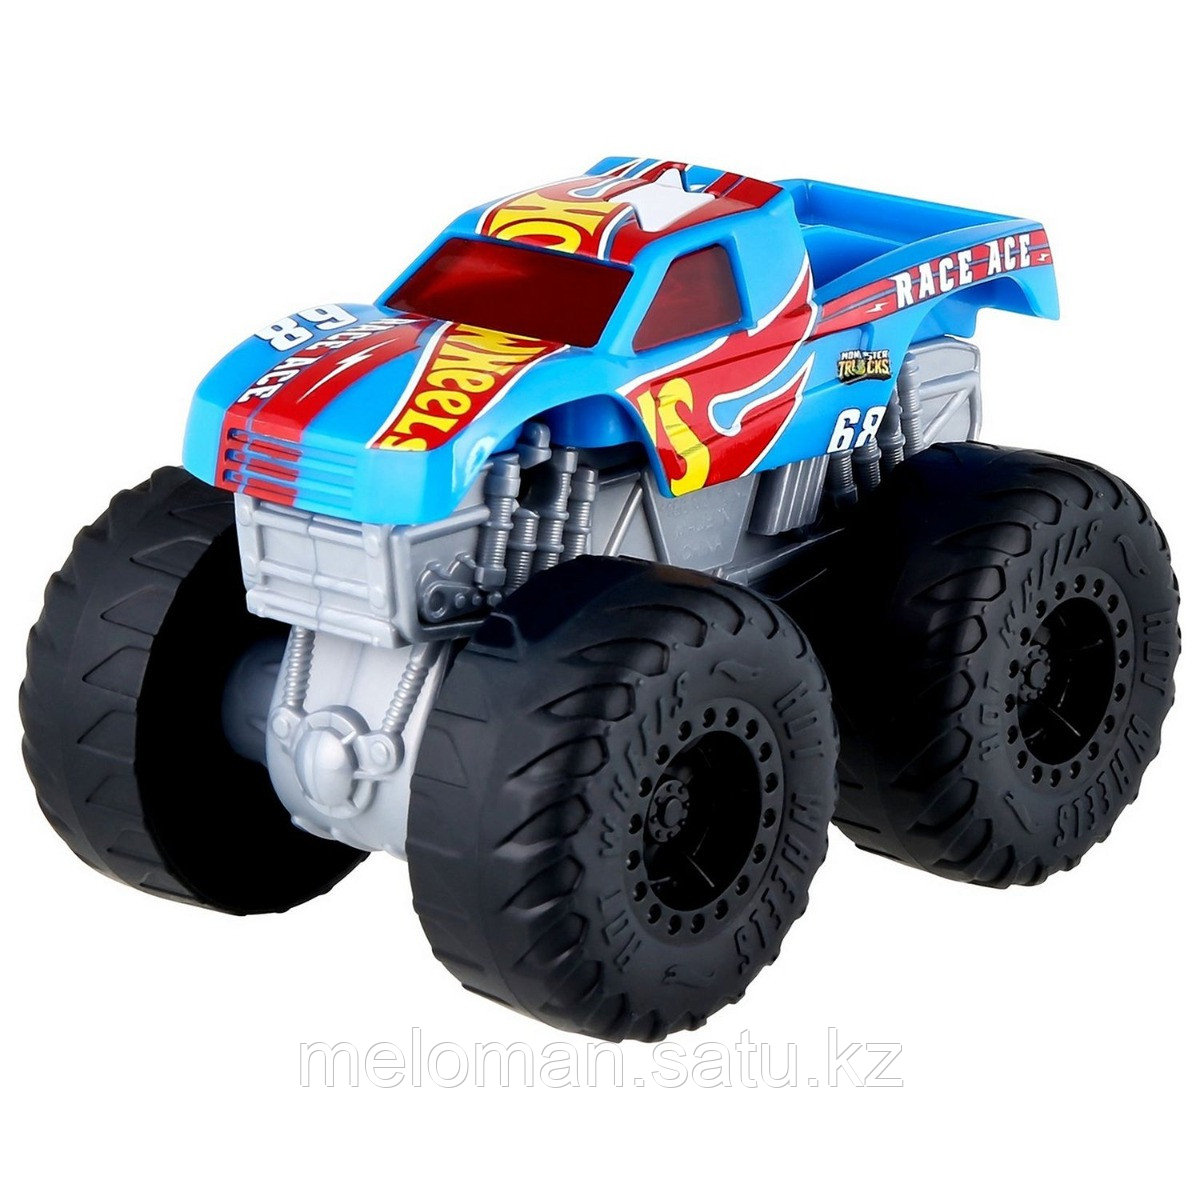 Hot Wheels: Monster Trucks. 1:43 машина со светом и звуком - Race Ace